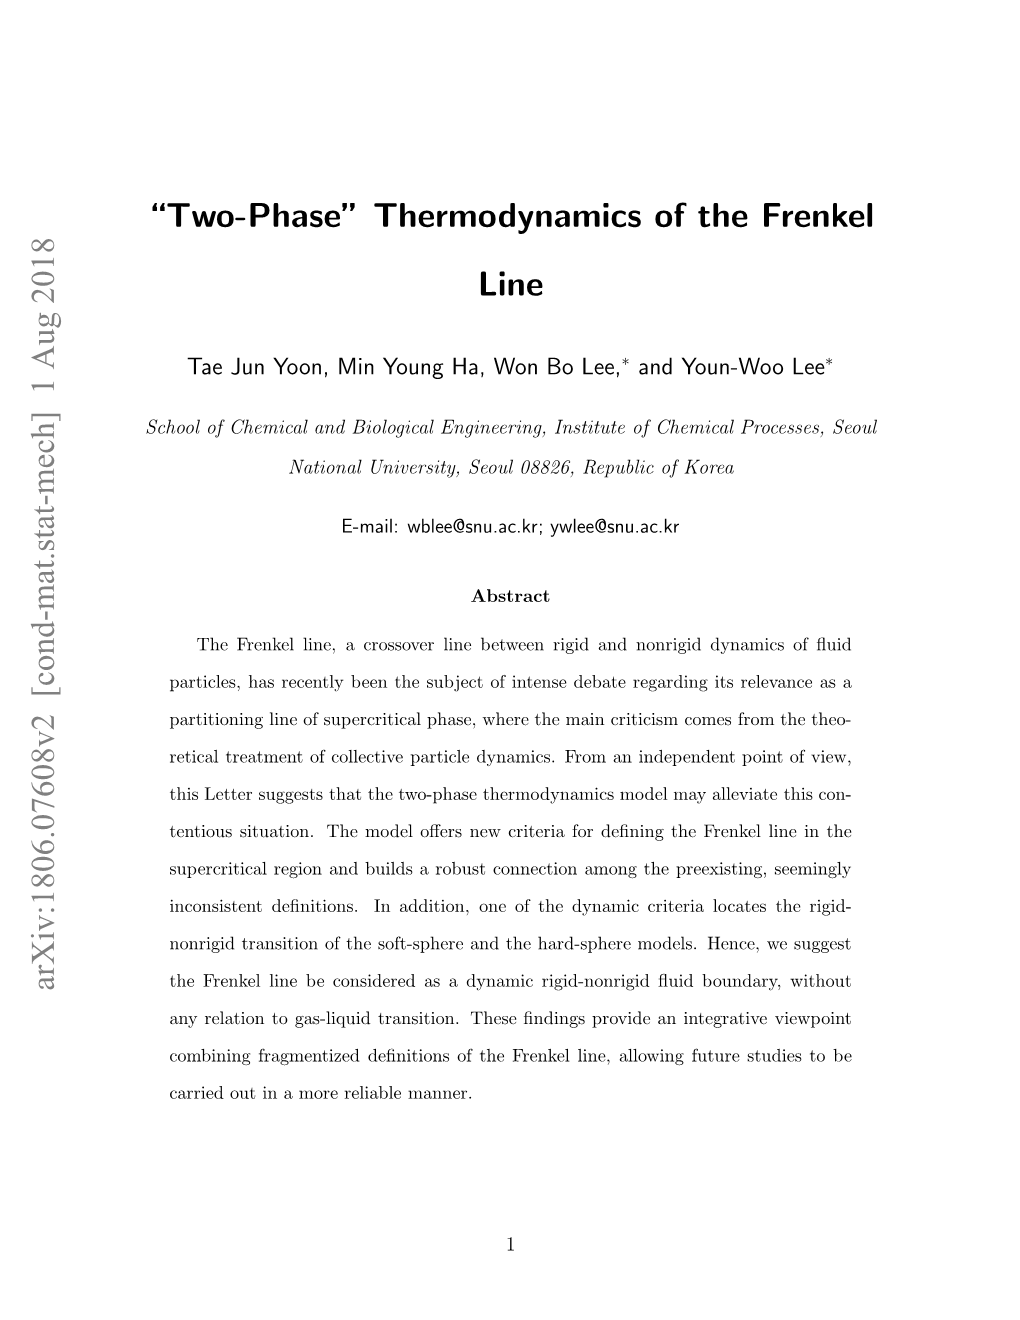 " Two-Phase" Thermodynamics of the Frenkel Line